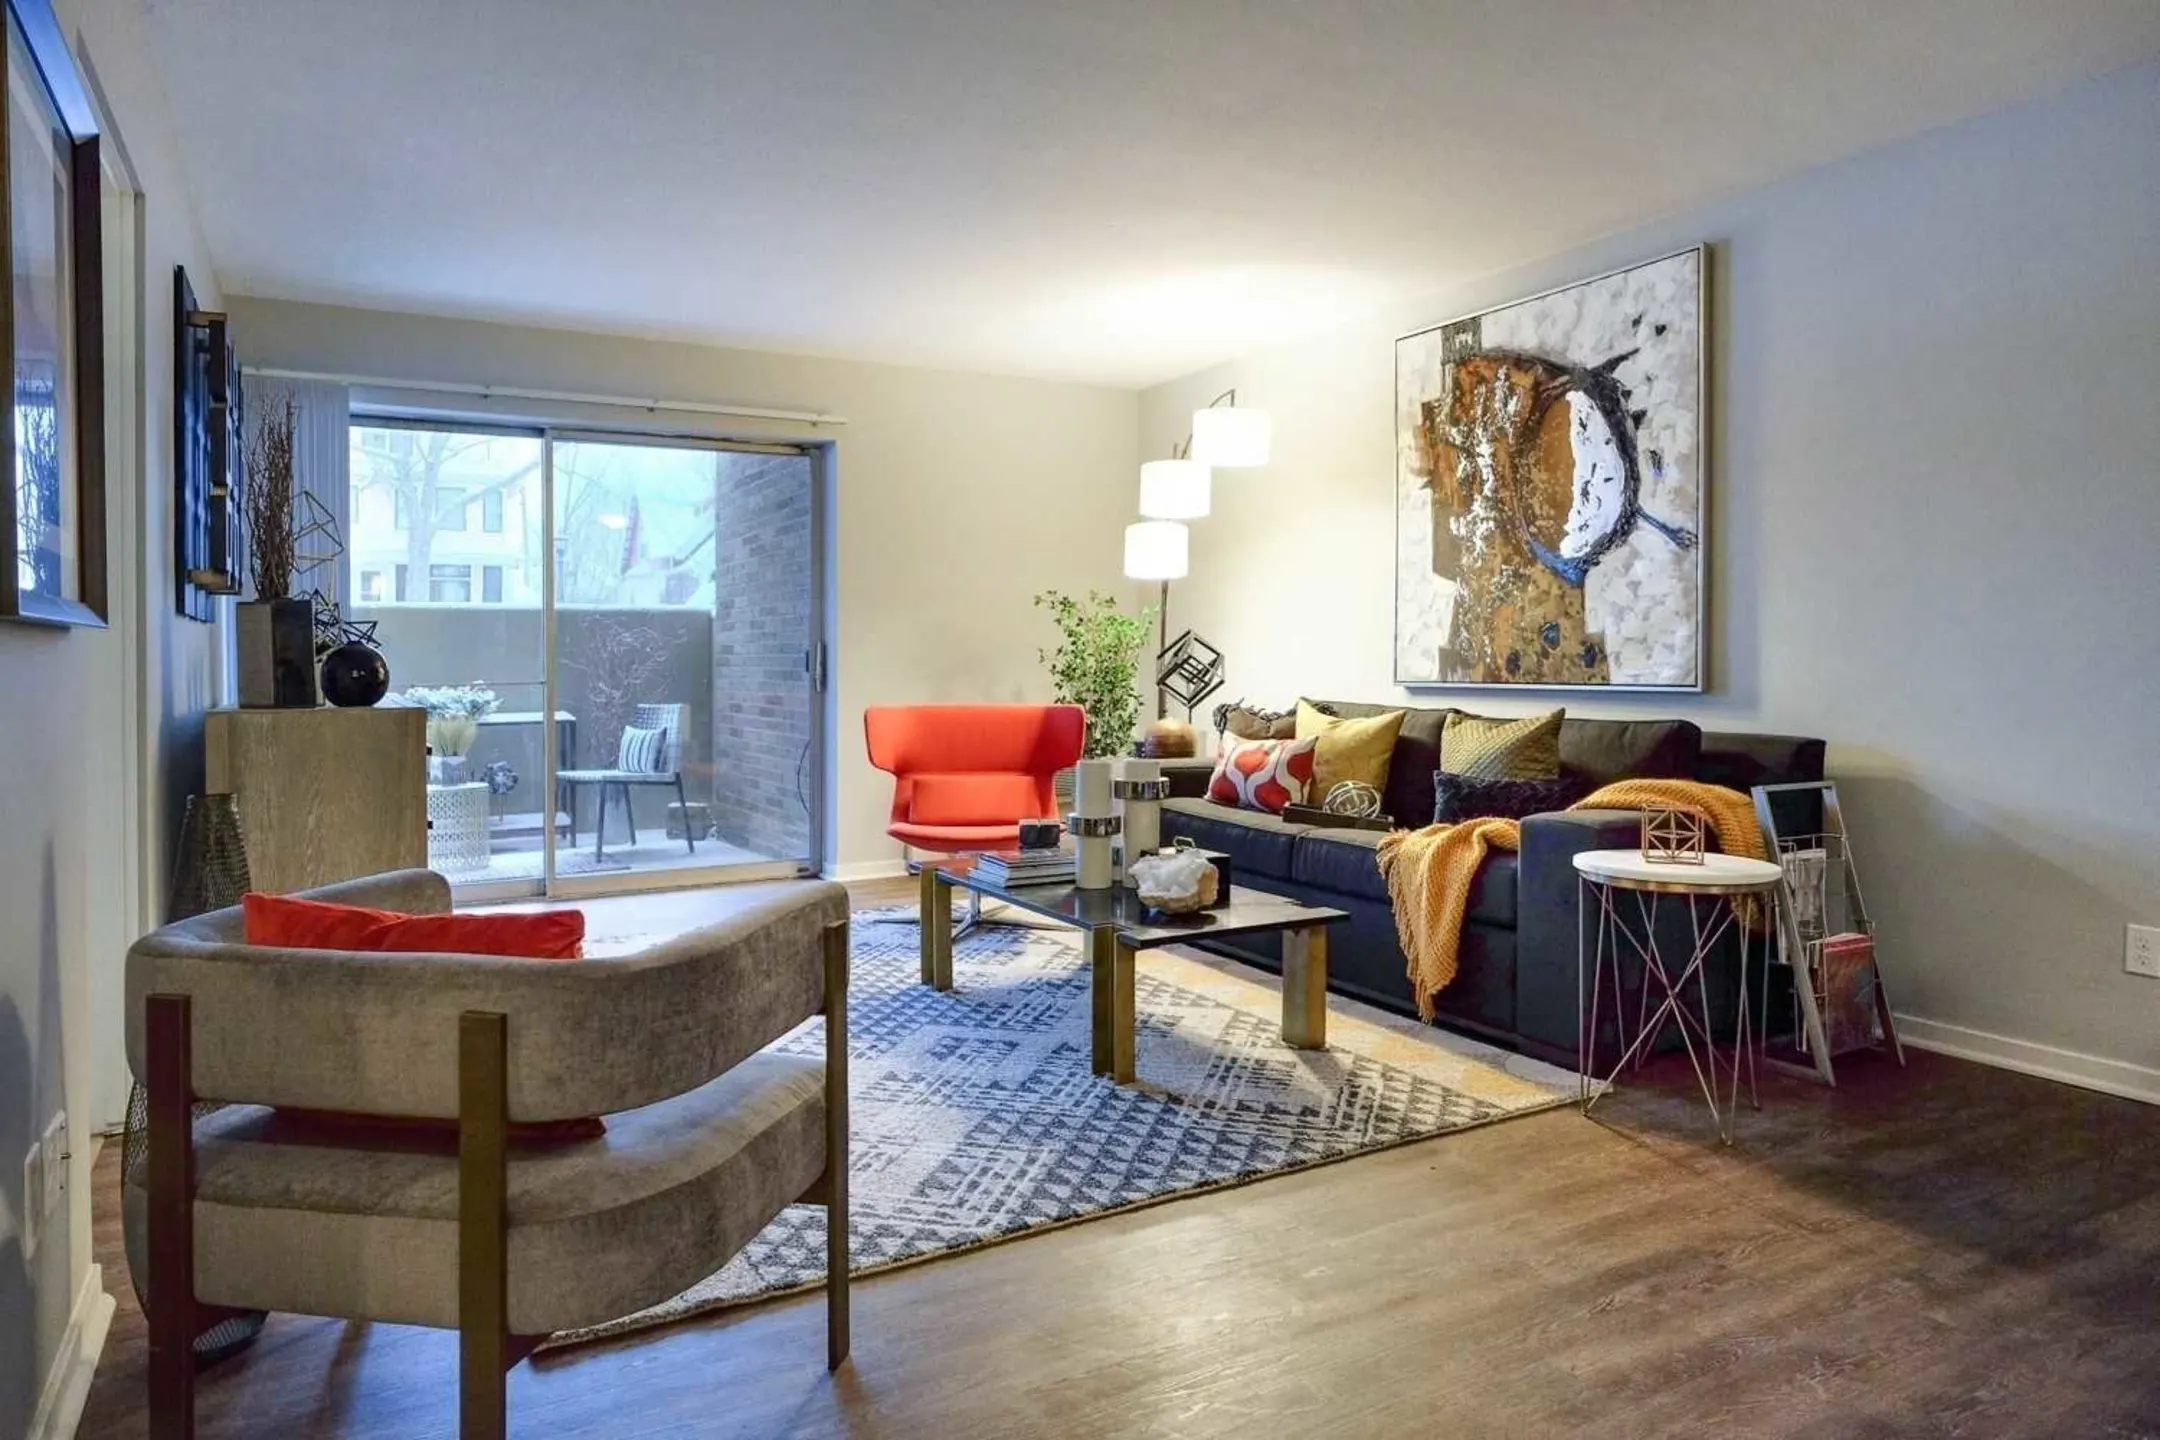 Living Room - Merriam Park Apartments - Saint Paul, MN